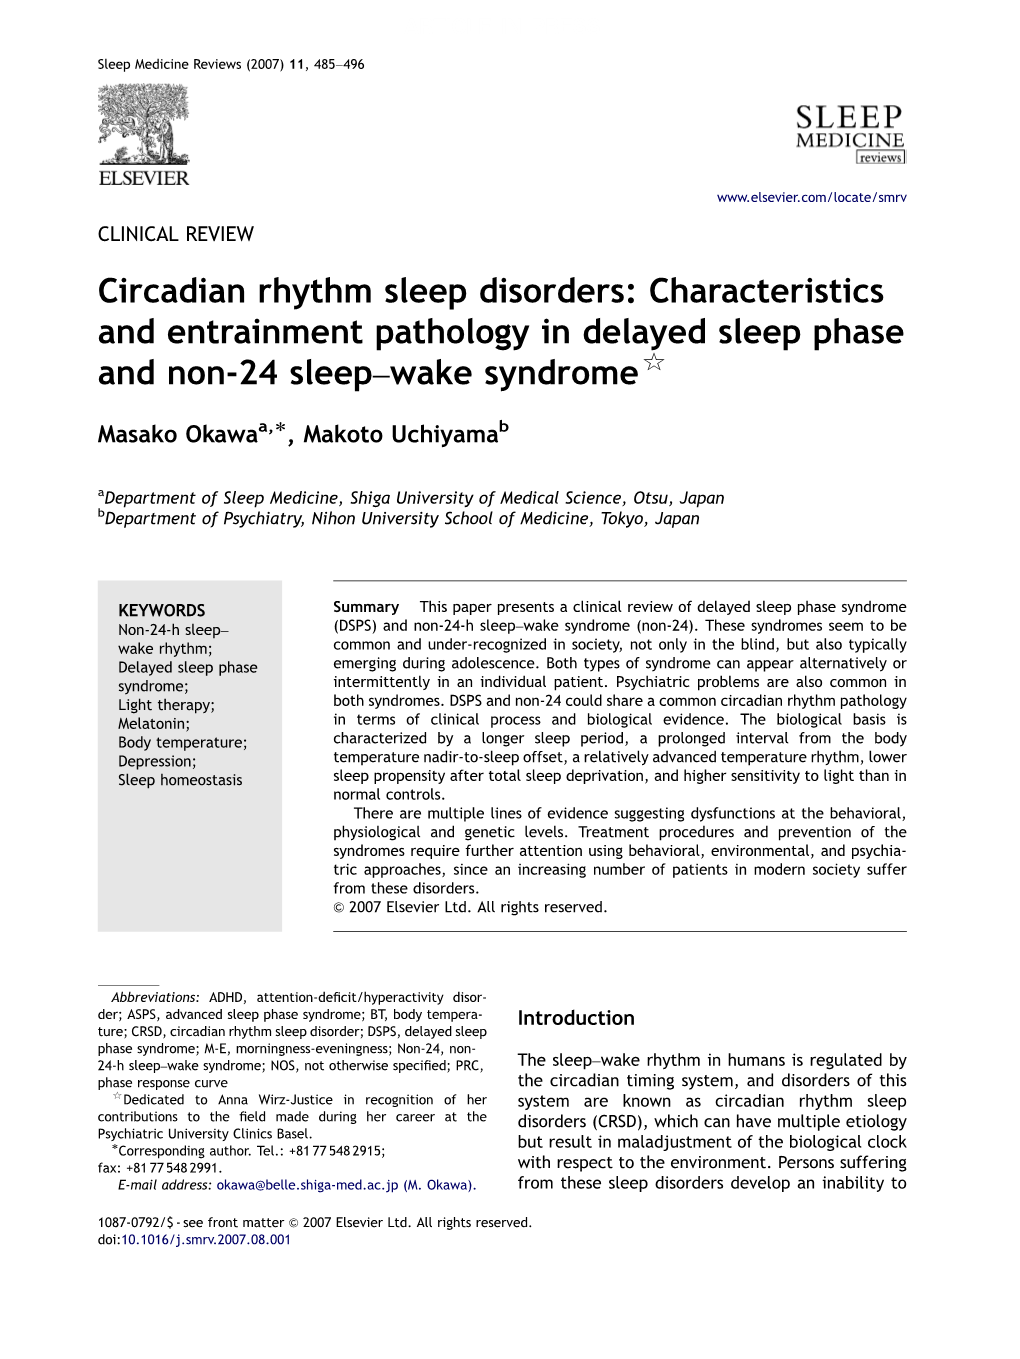 Circadian Rhythm Sleep Disorders: Characteristics and Entrainment Pathology in Delayed Sleep Phase and Non-24 Sleep–Wake Syndrome$